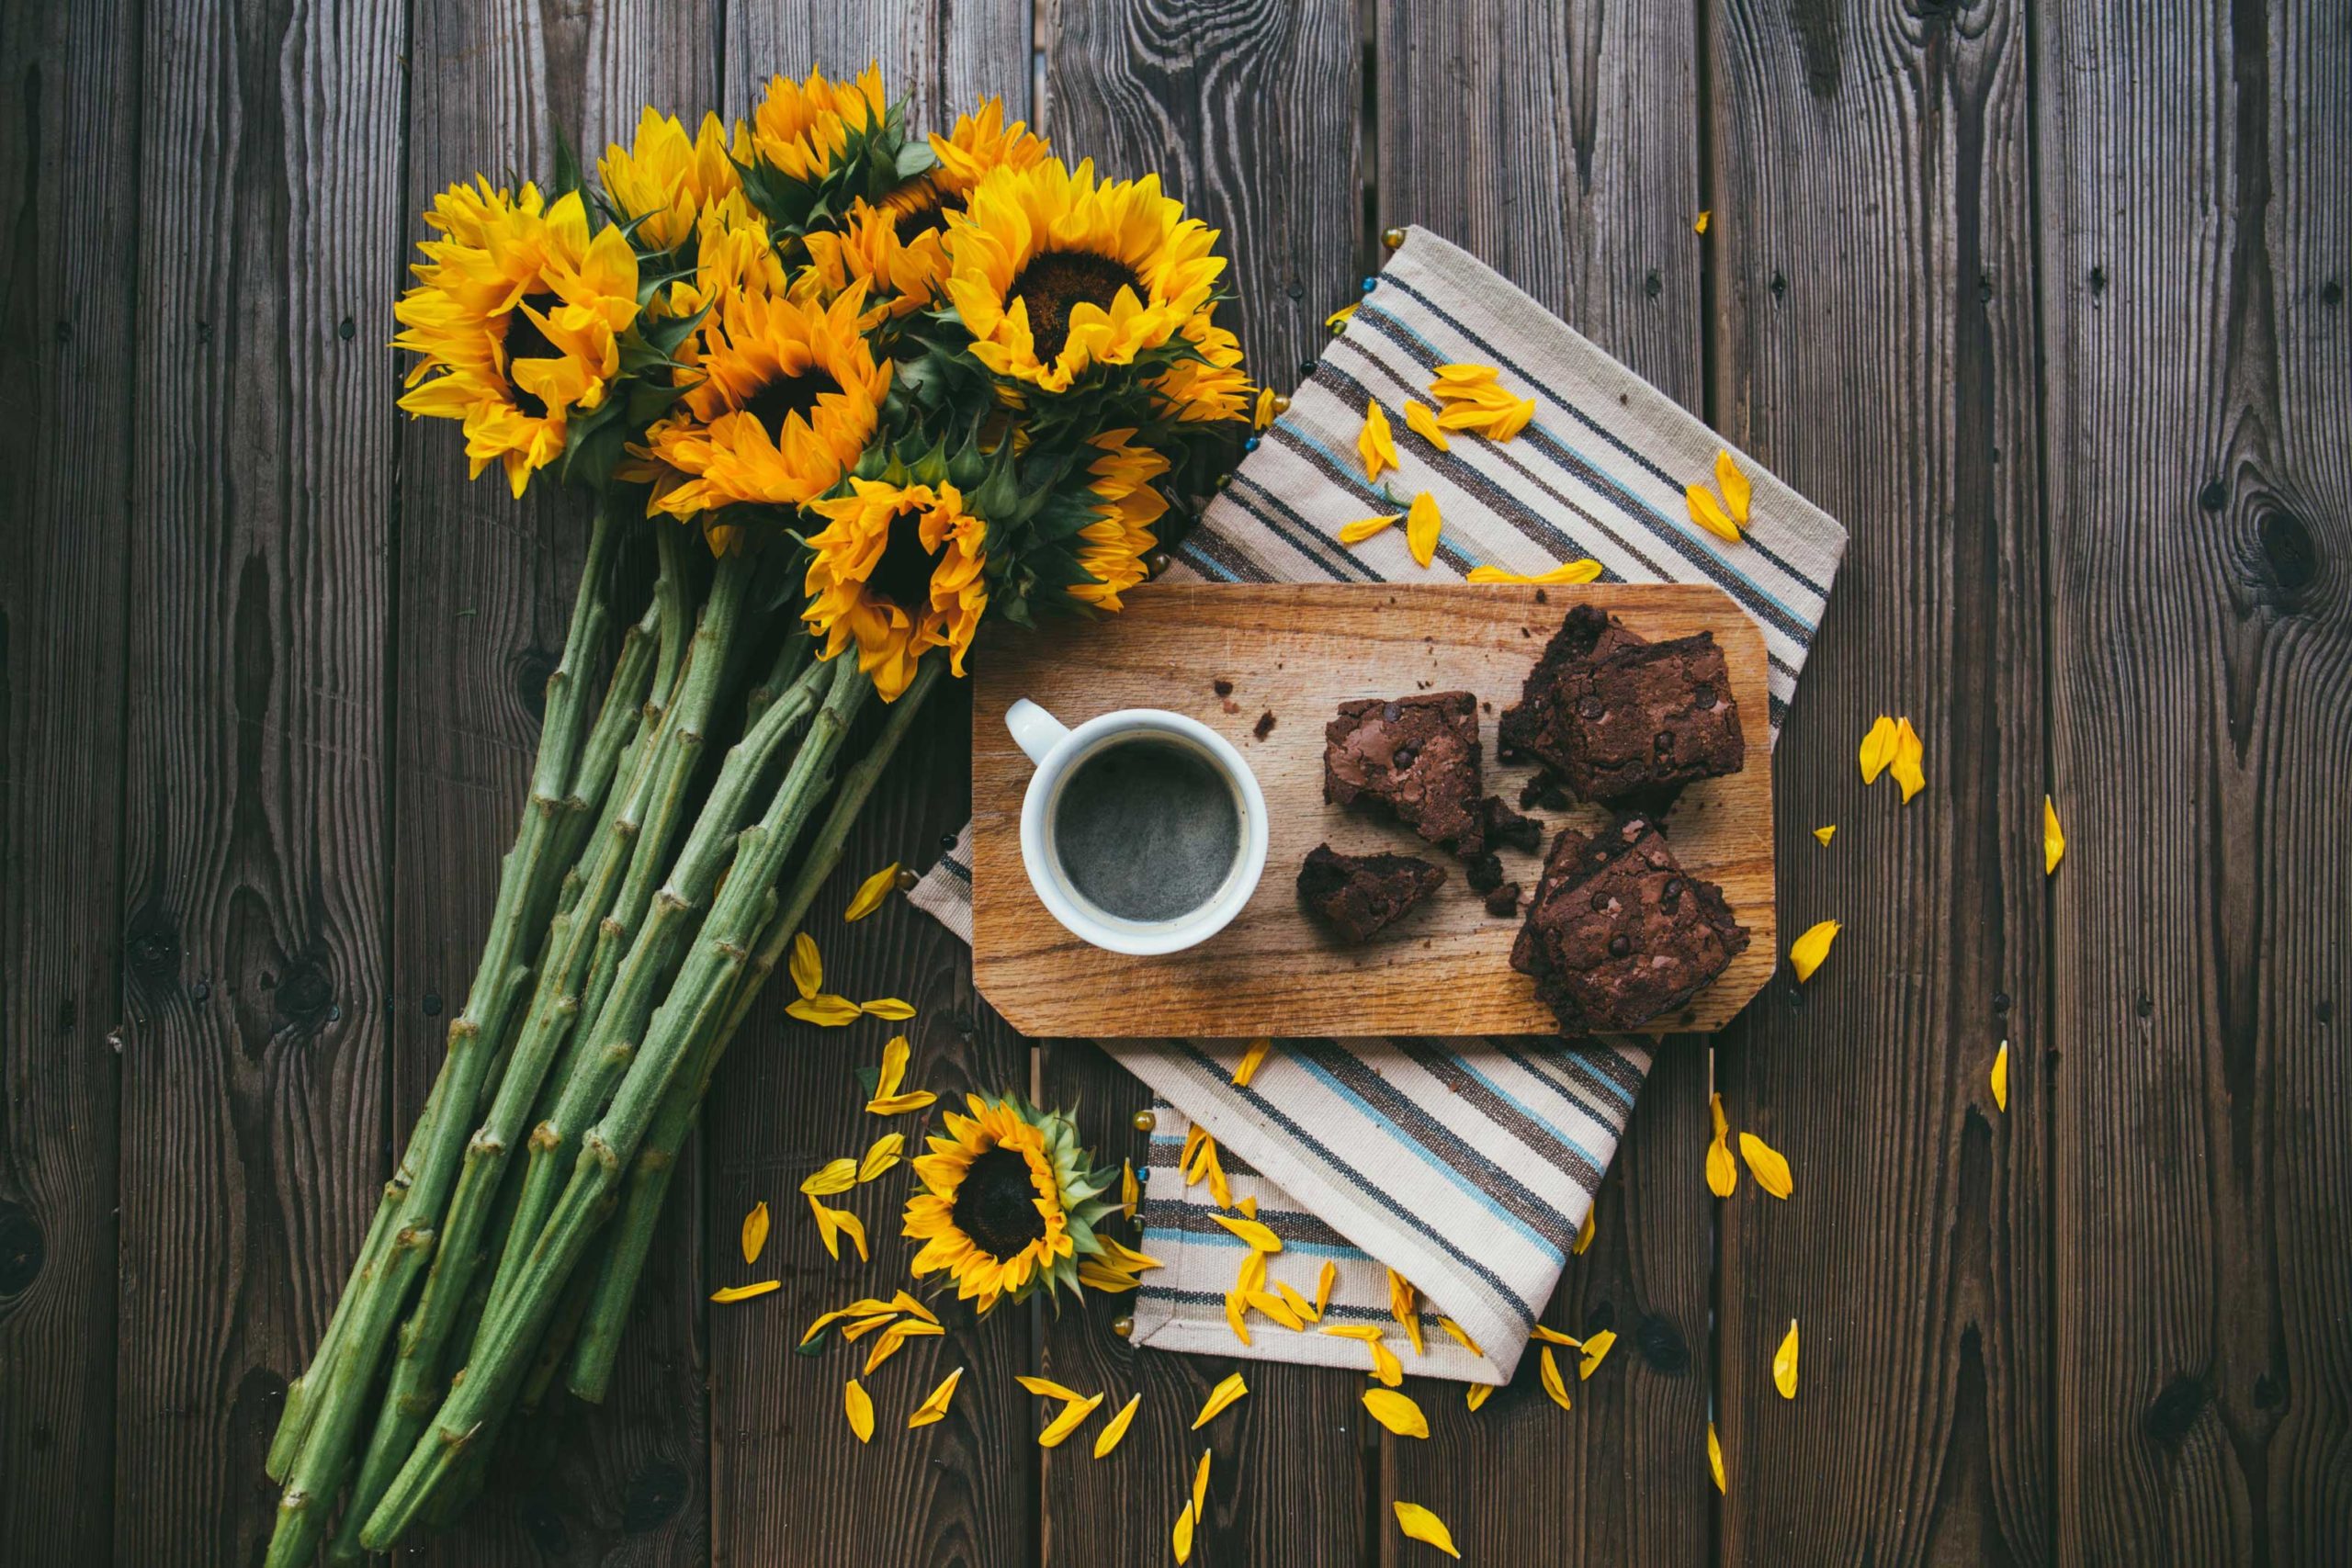 Gourmet Coffee, treats, and sunflowers 